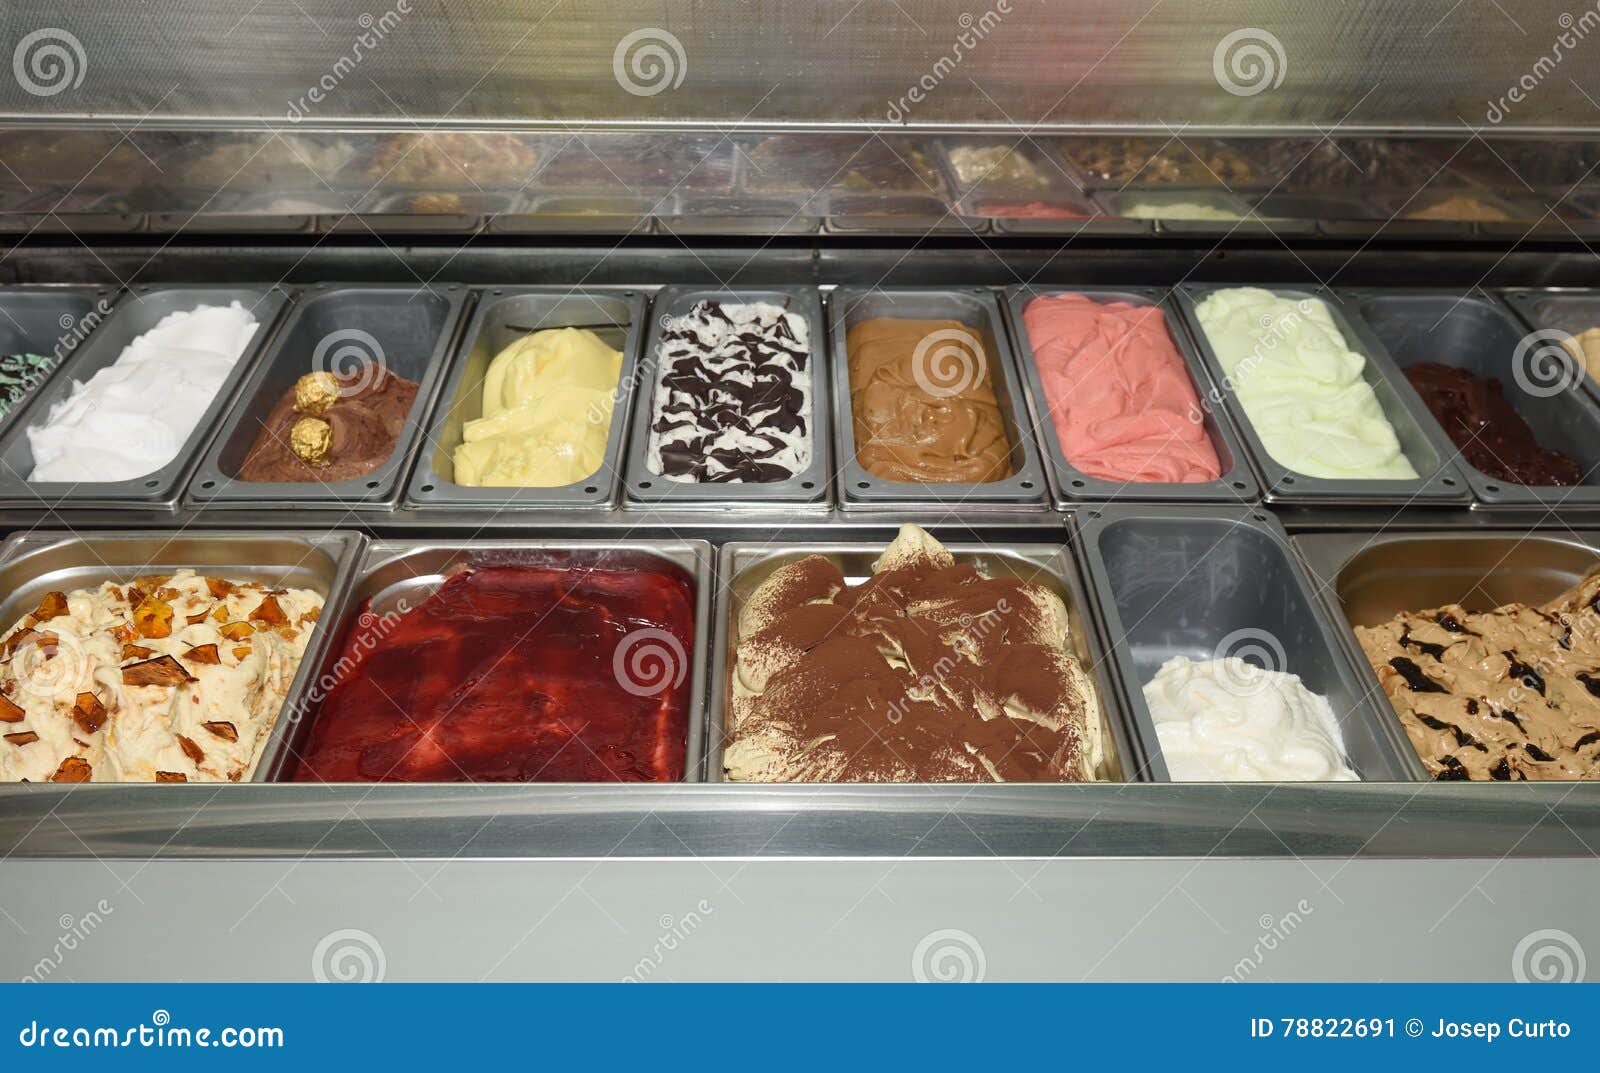 showcase ice cream in an ice